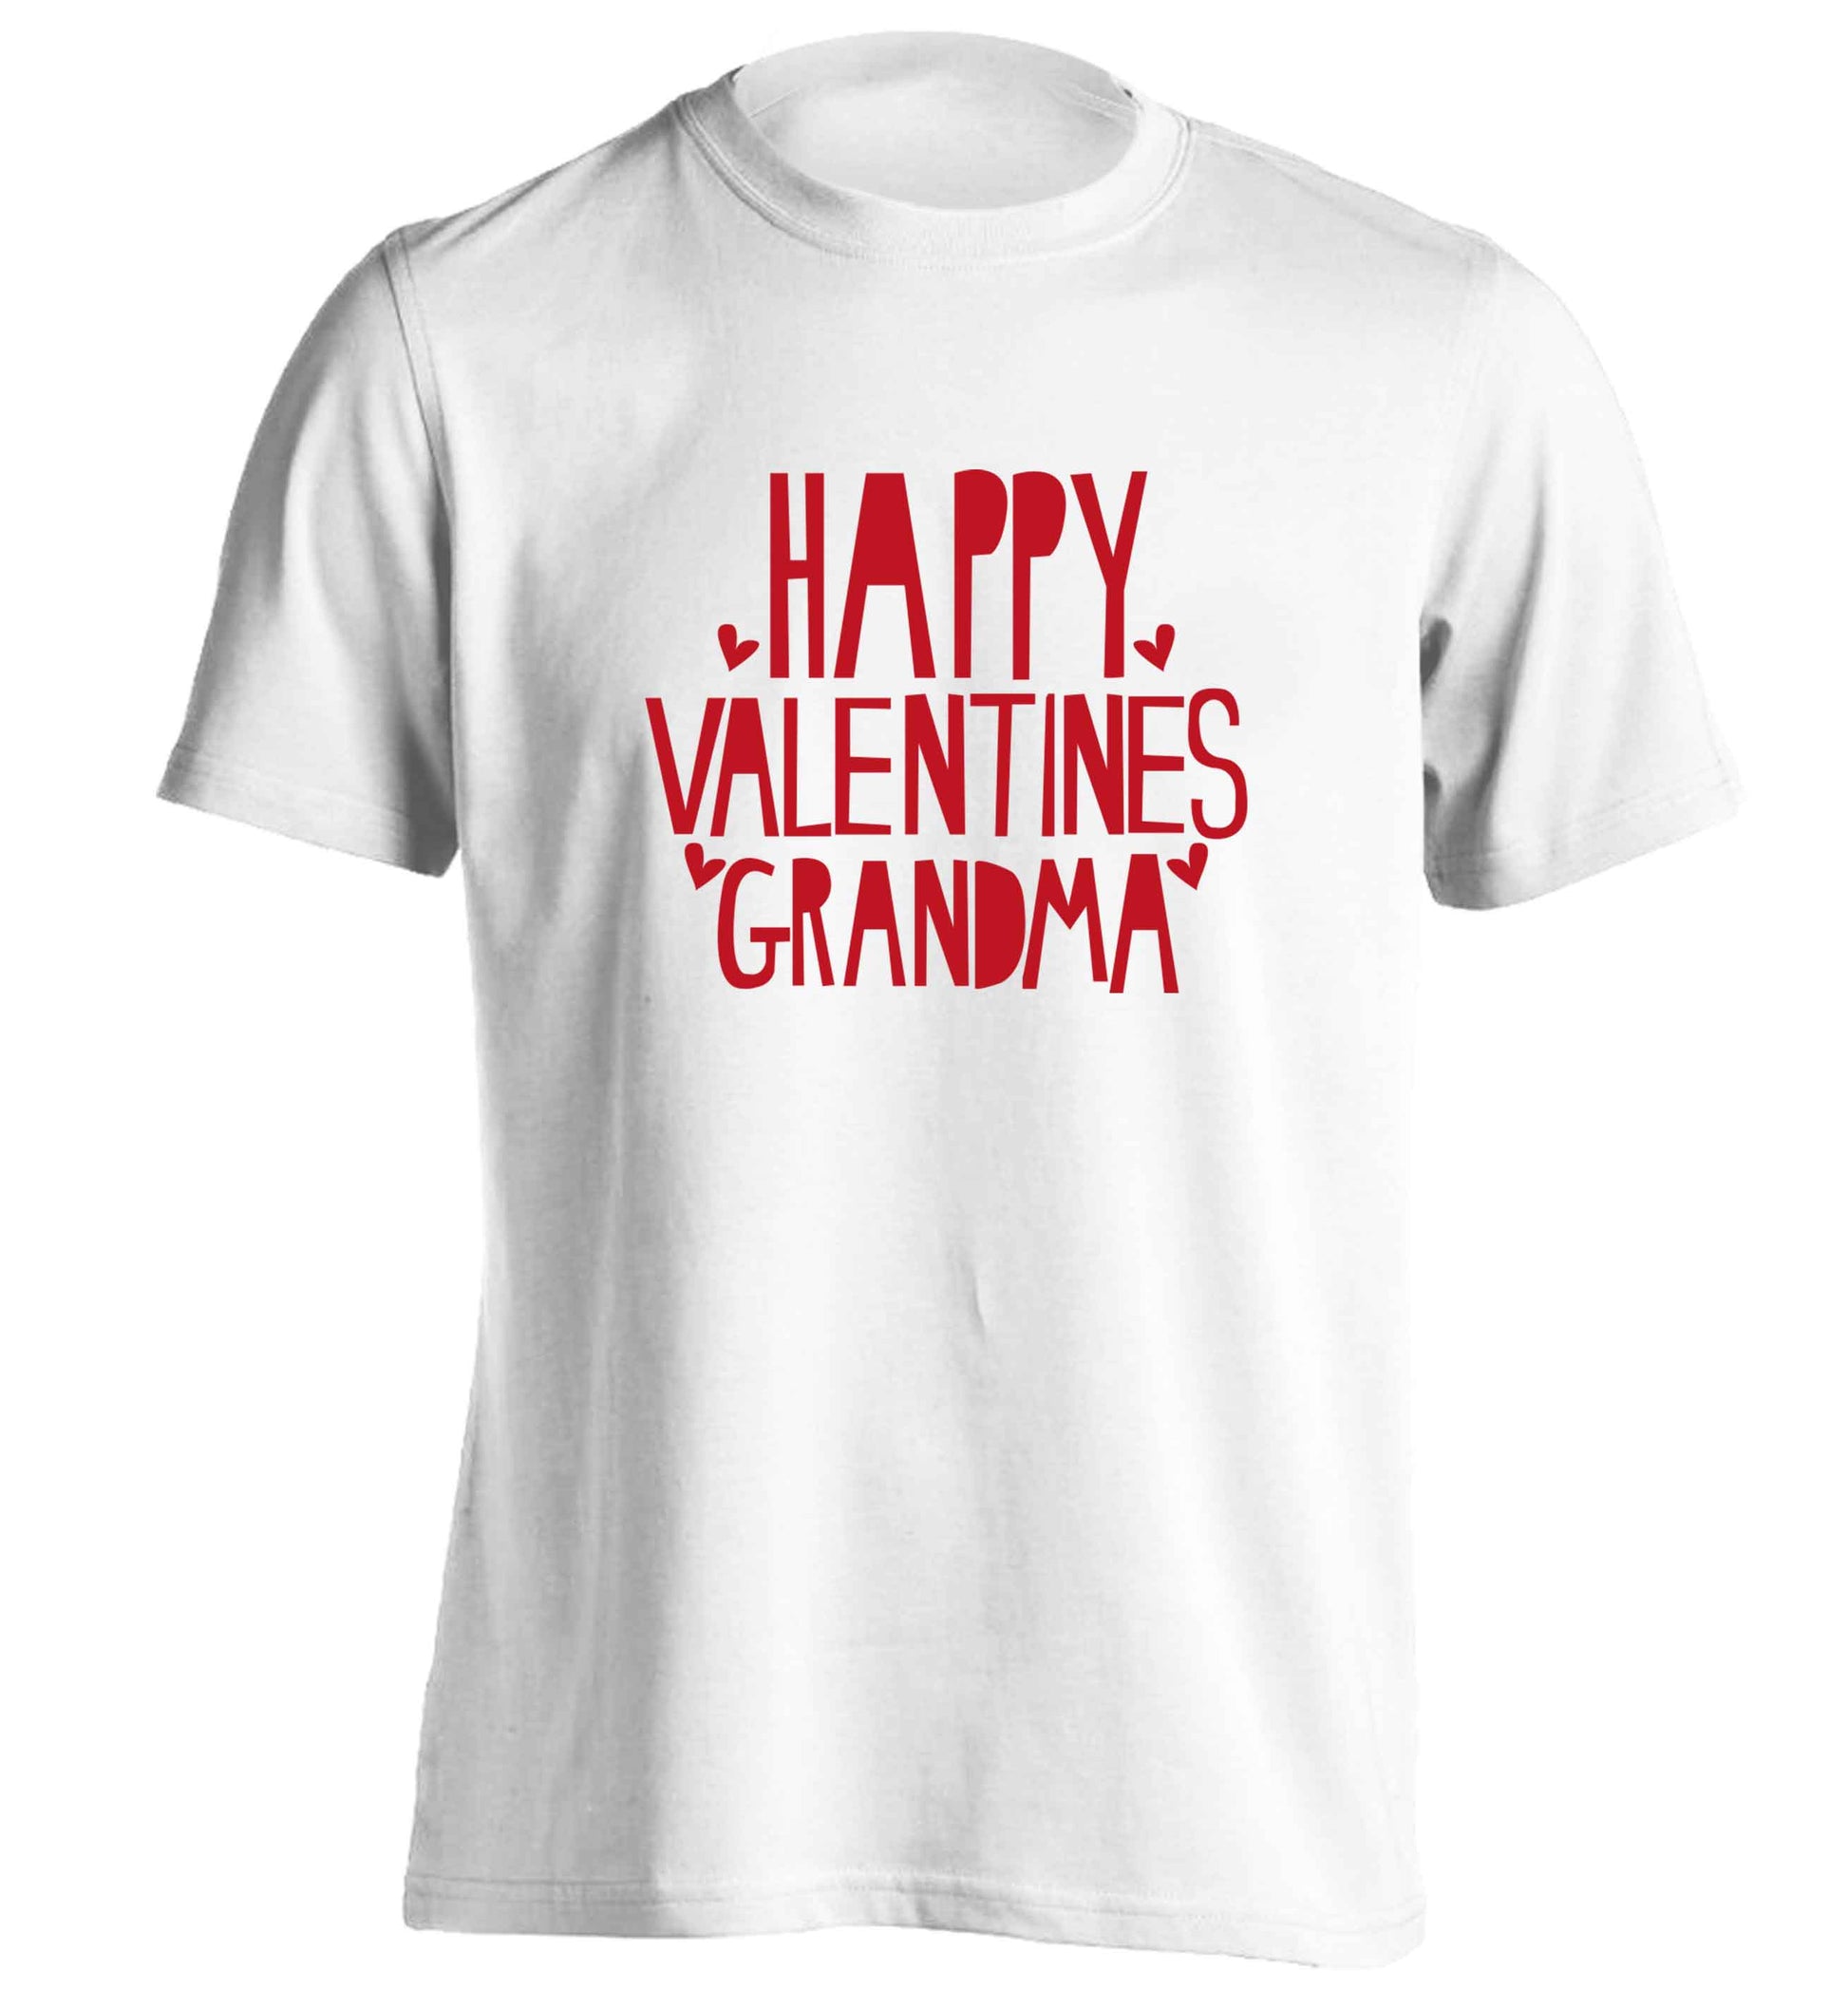 Happy valentines grandma adults unisex white Tshirt 2XL